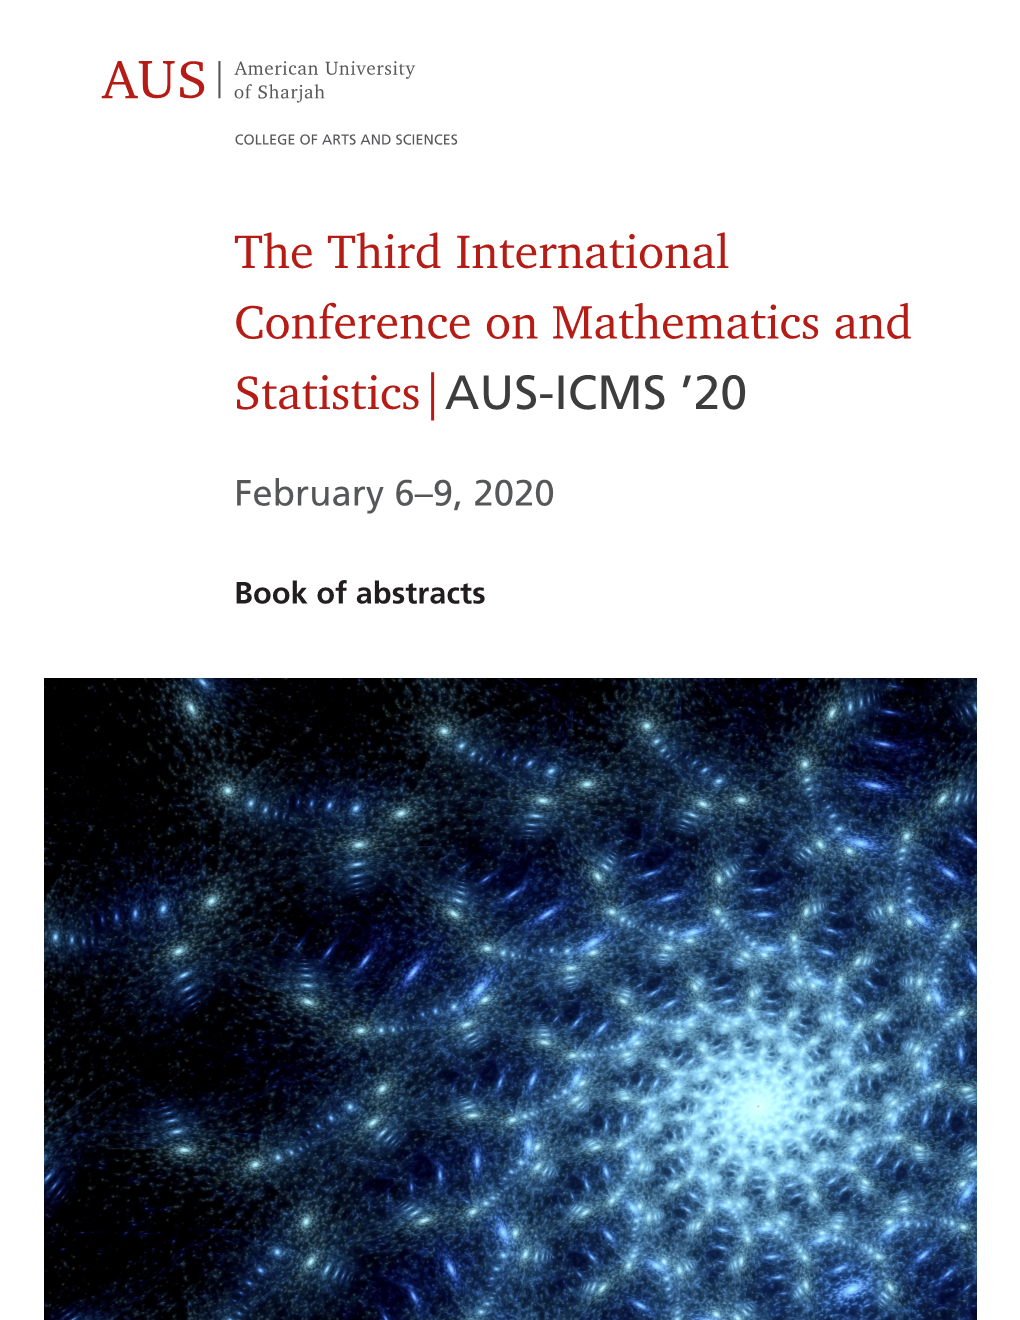 The Third International Conference on Mathematics and Statistics|AUS